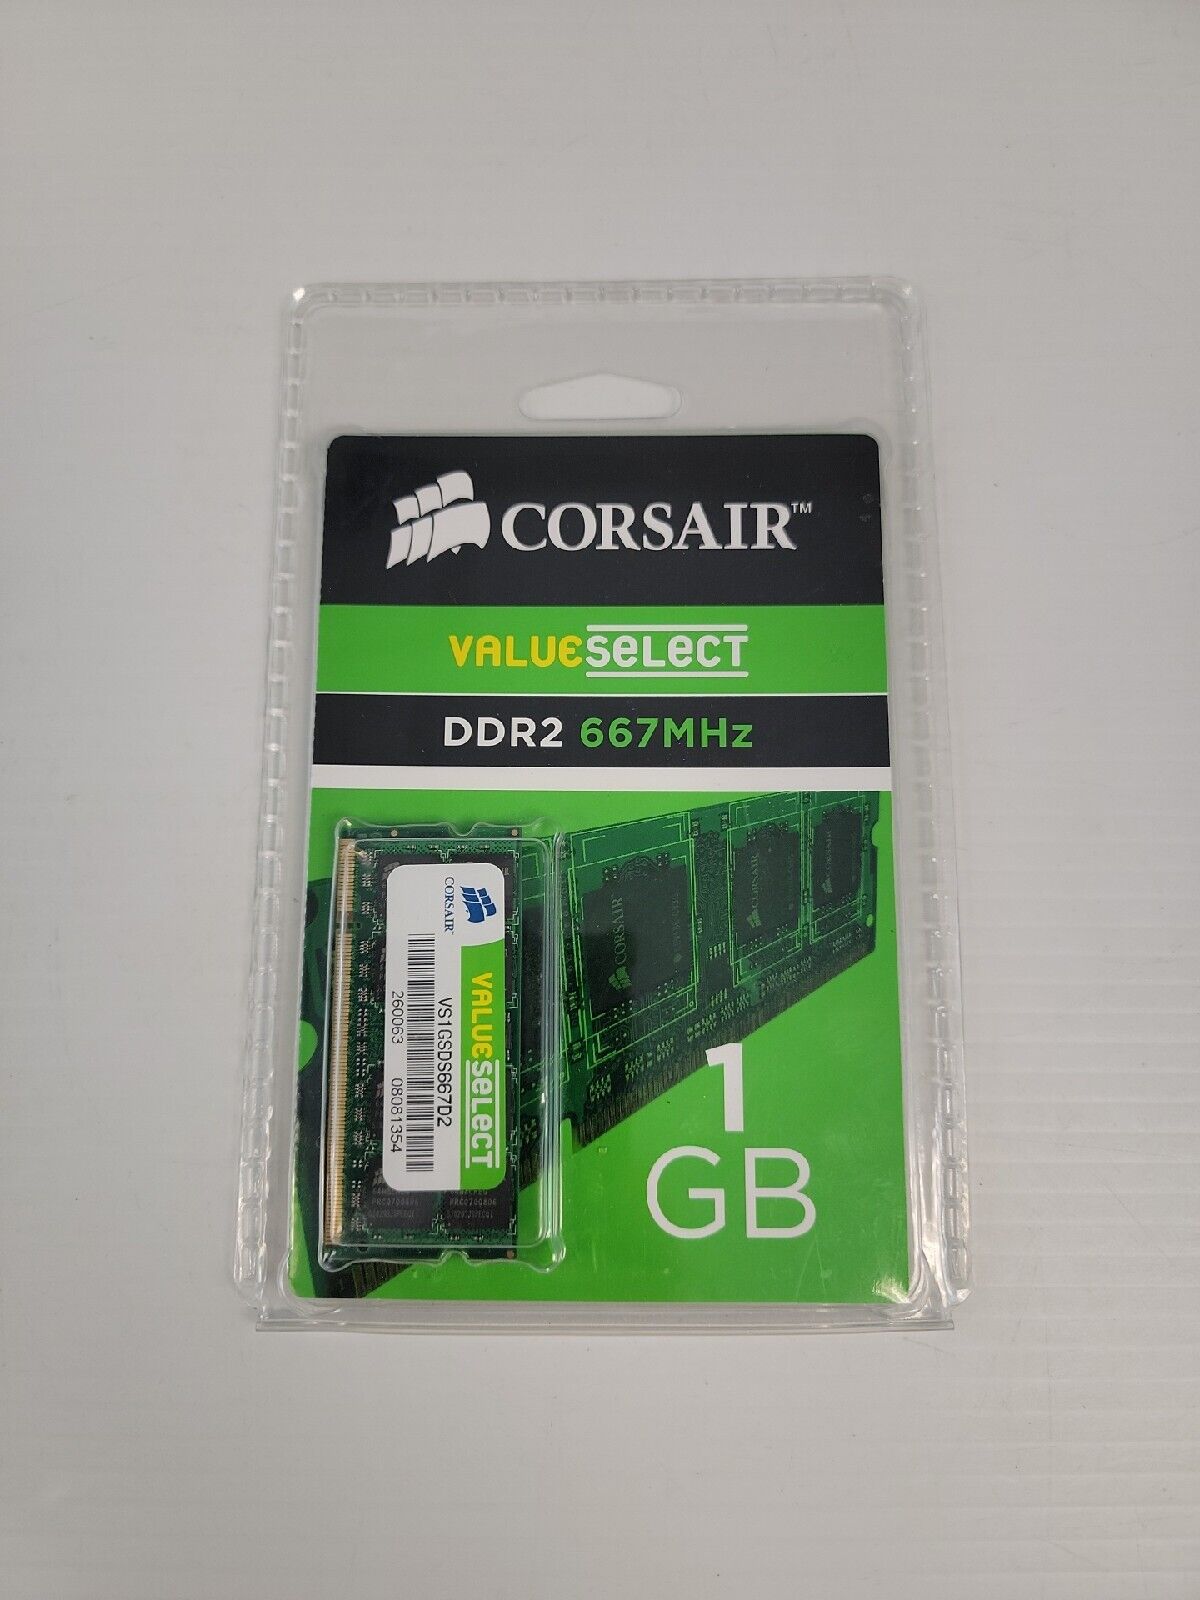 NEW - CORSAIR value select DDR2 667mhz Memory module 1 GB NIP